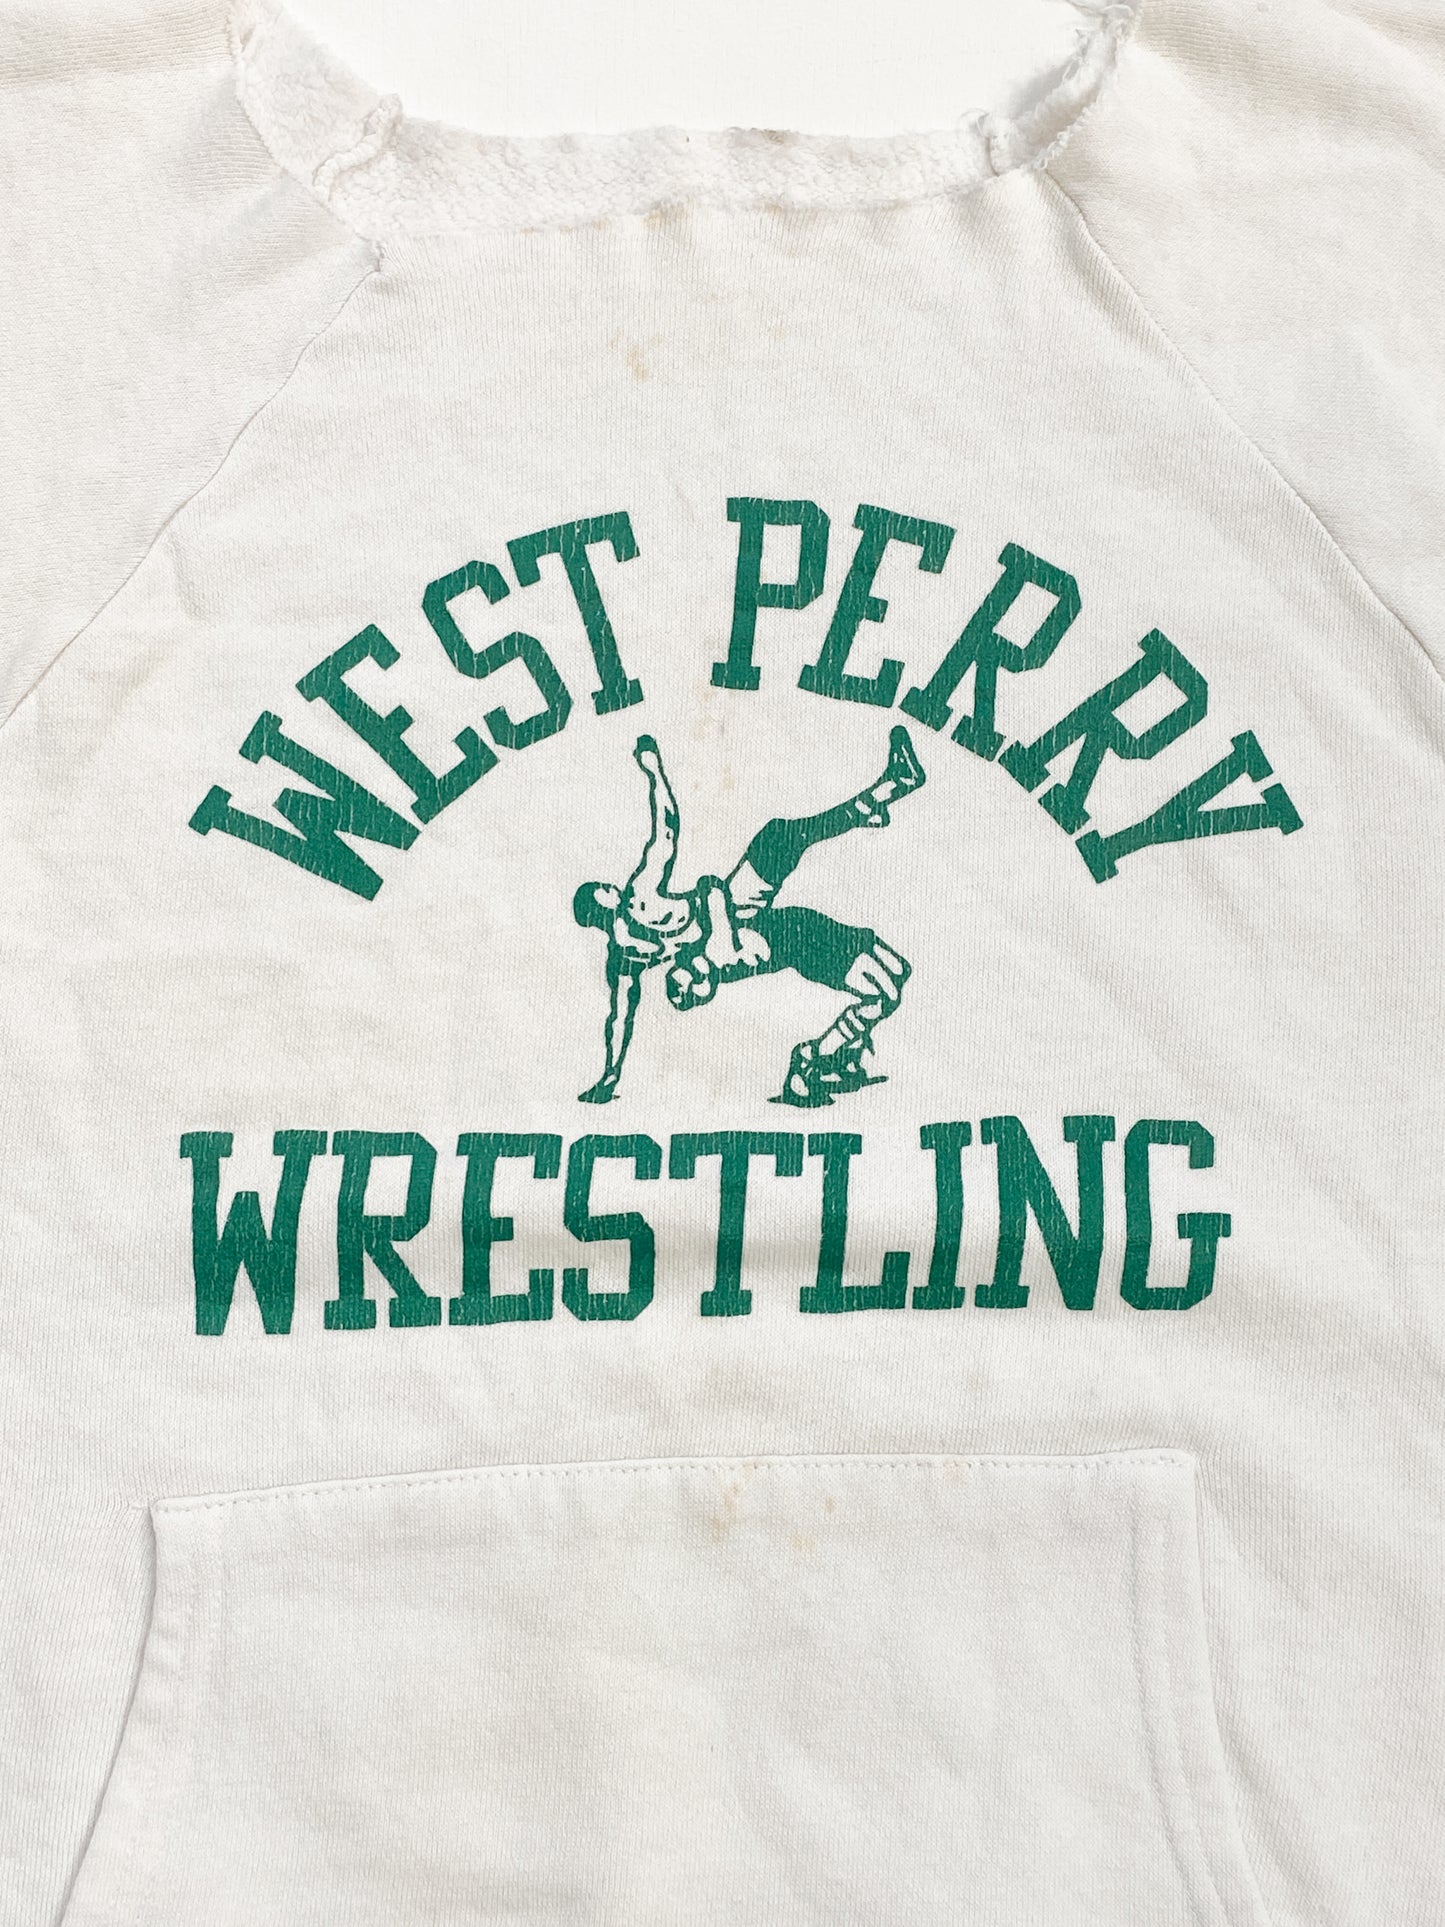 1960's West Perry Wrestling Cutoff Sweat